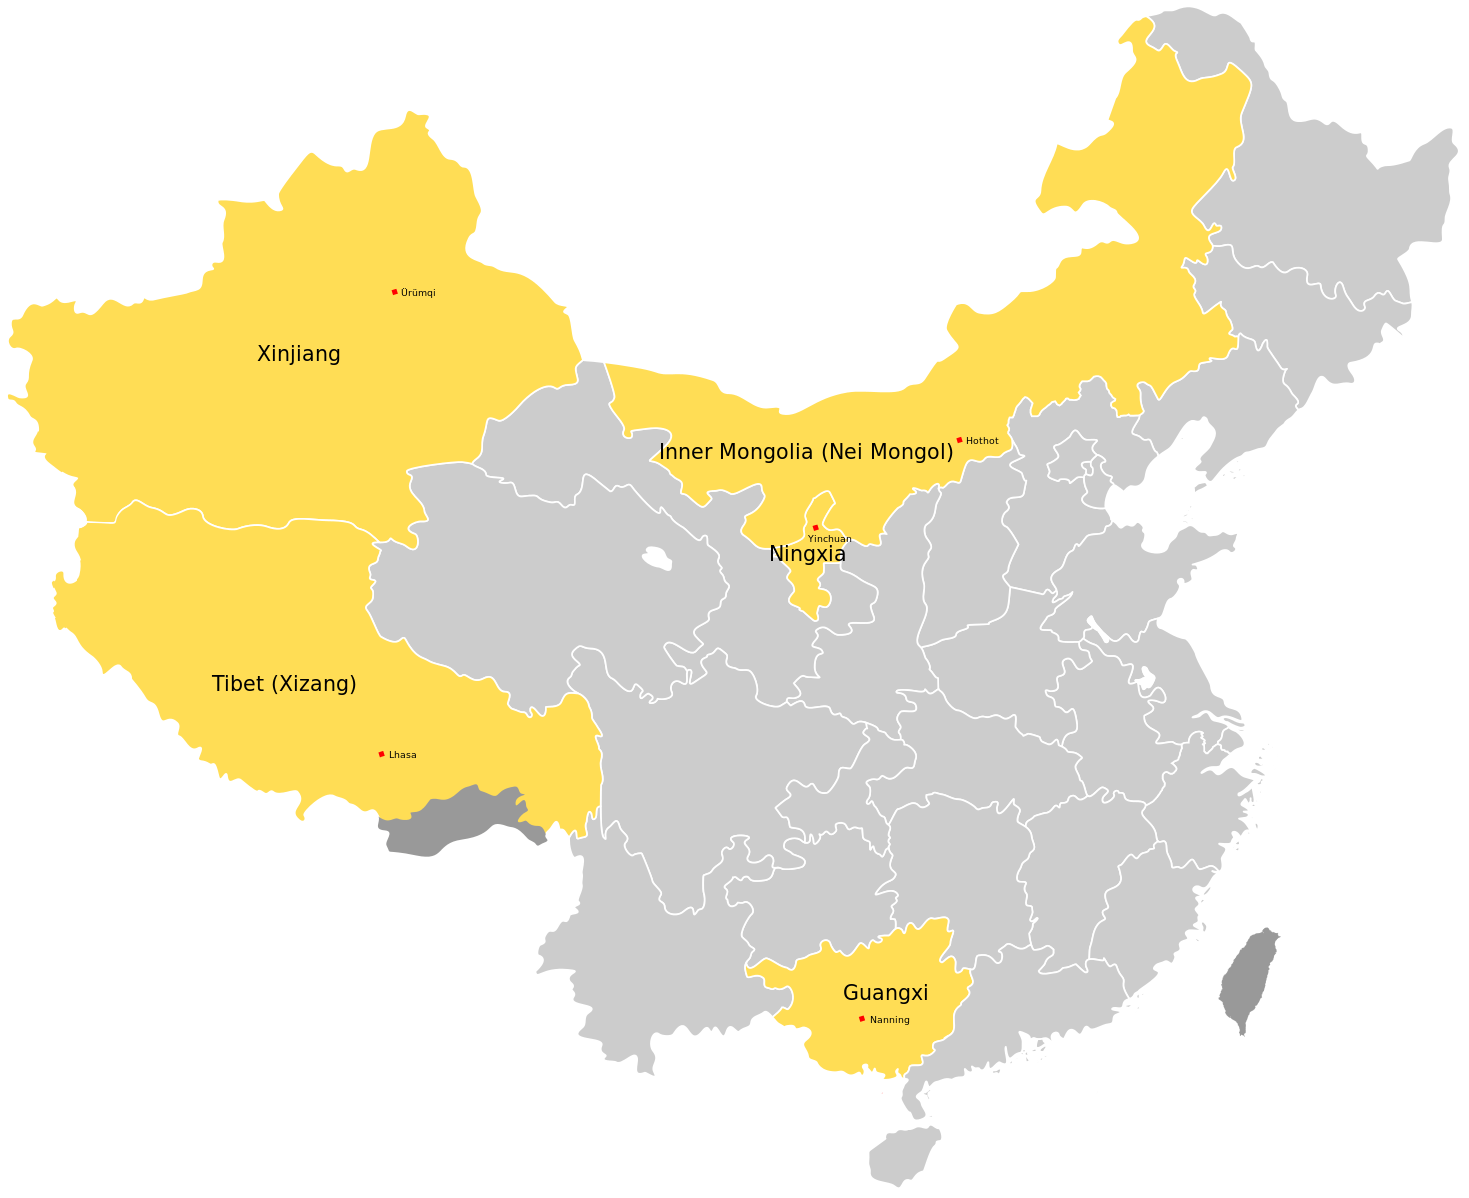 China's autonomous regions